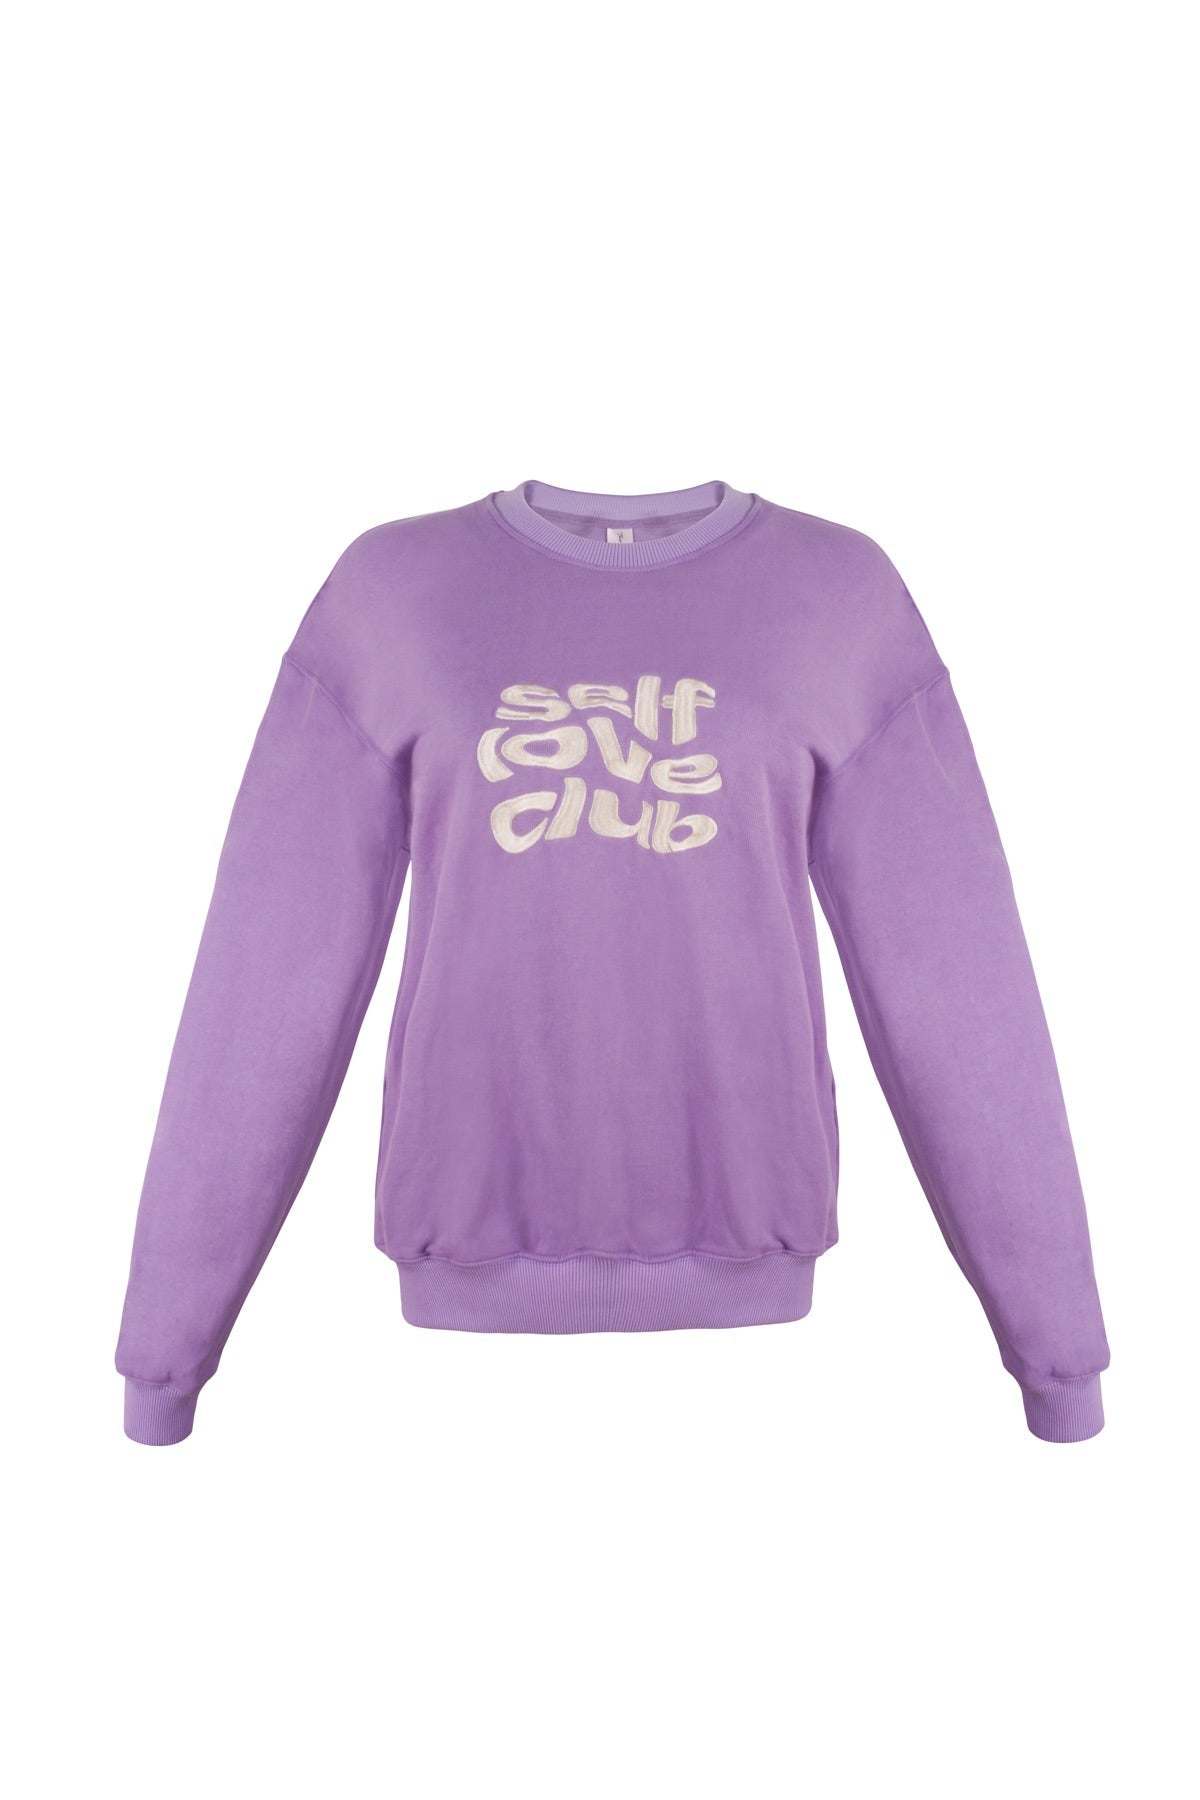 APPAREL - Self Love Club Sweatshirt (Lilac)